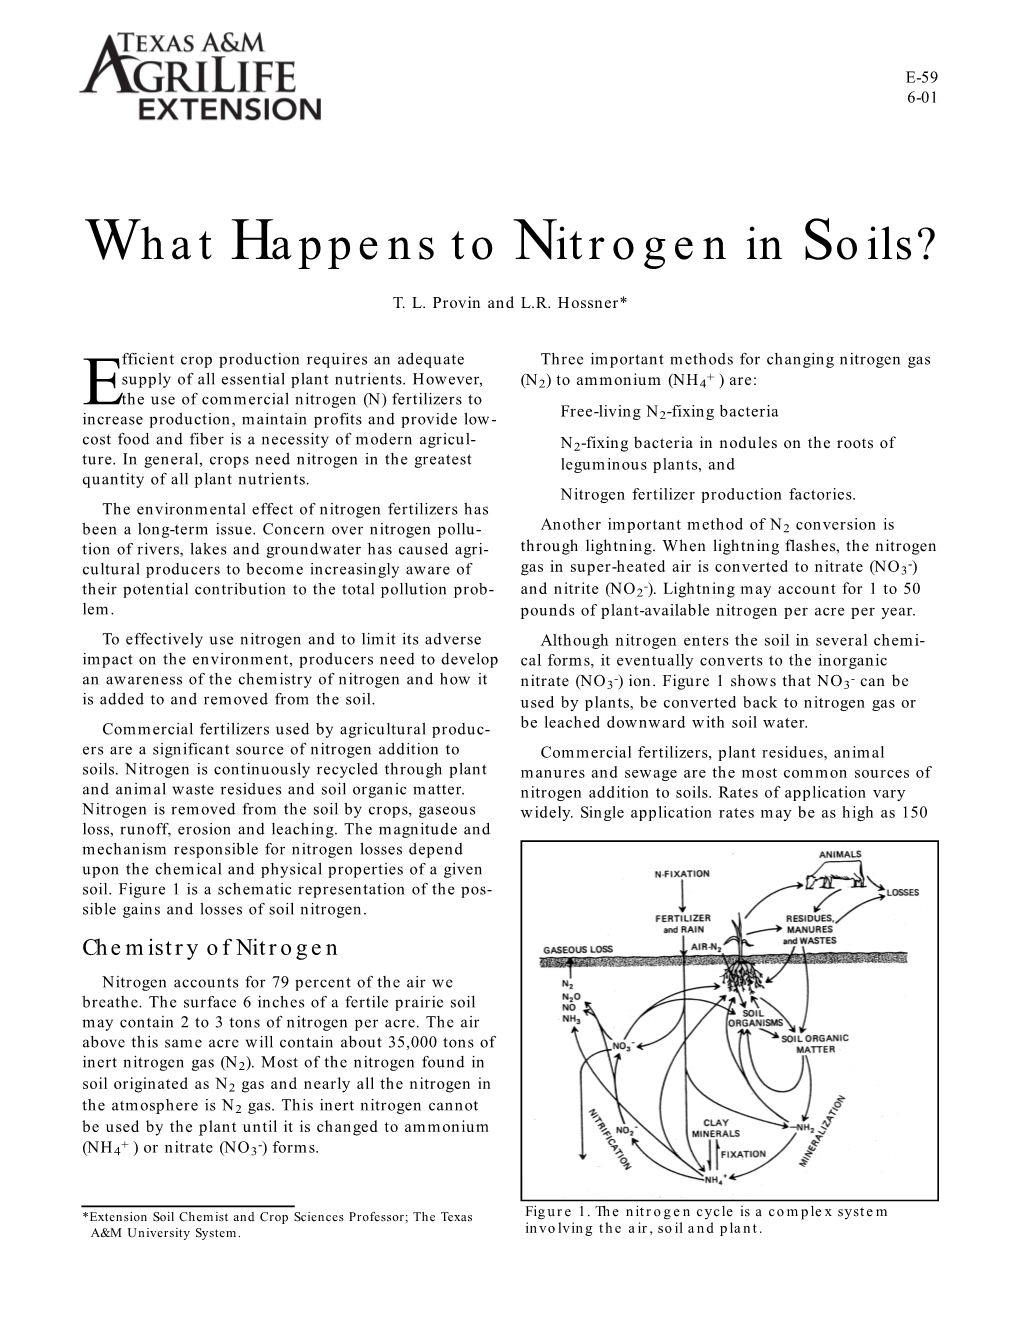 What Happens to Nitrogen in Soils?